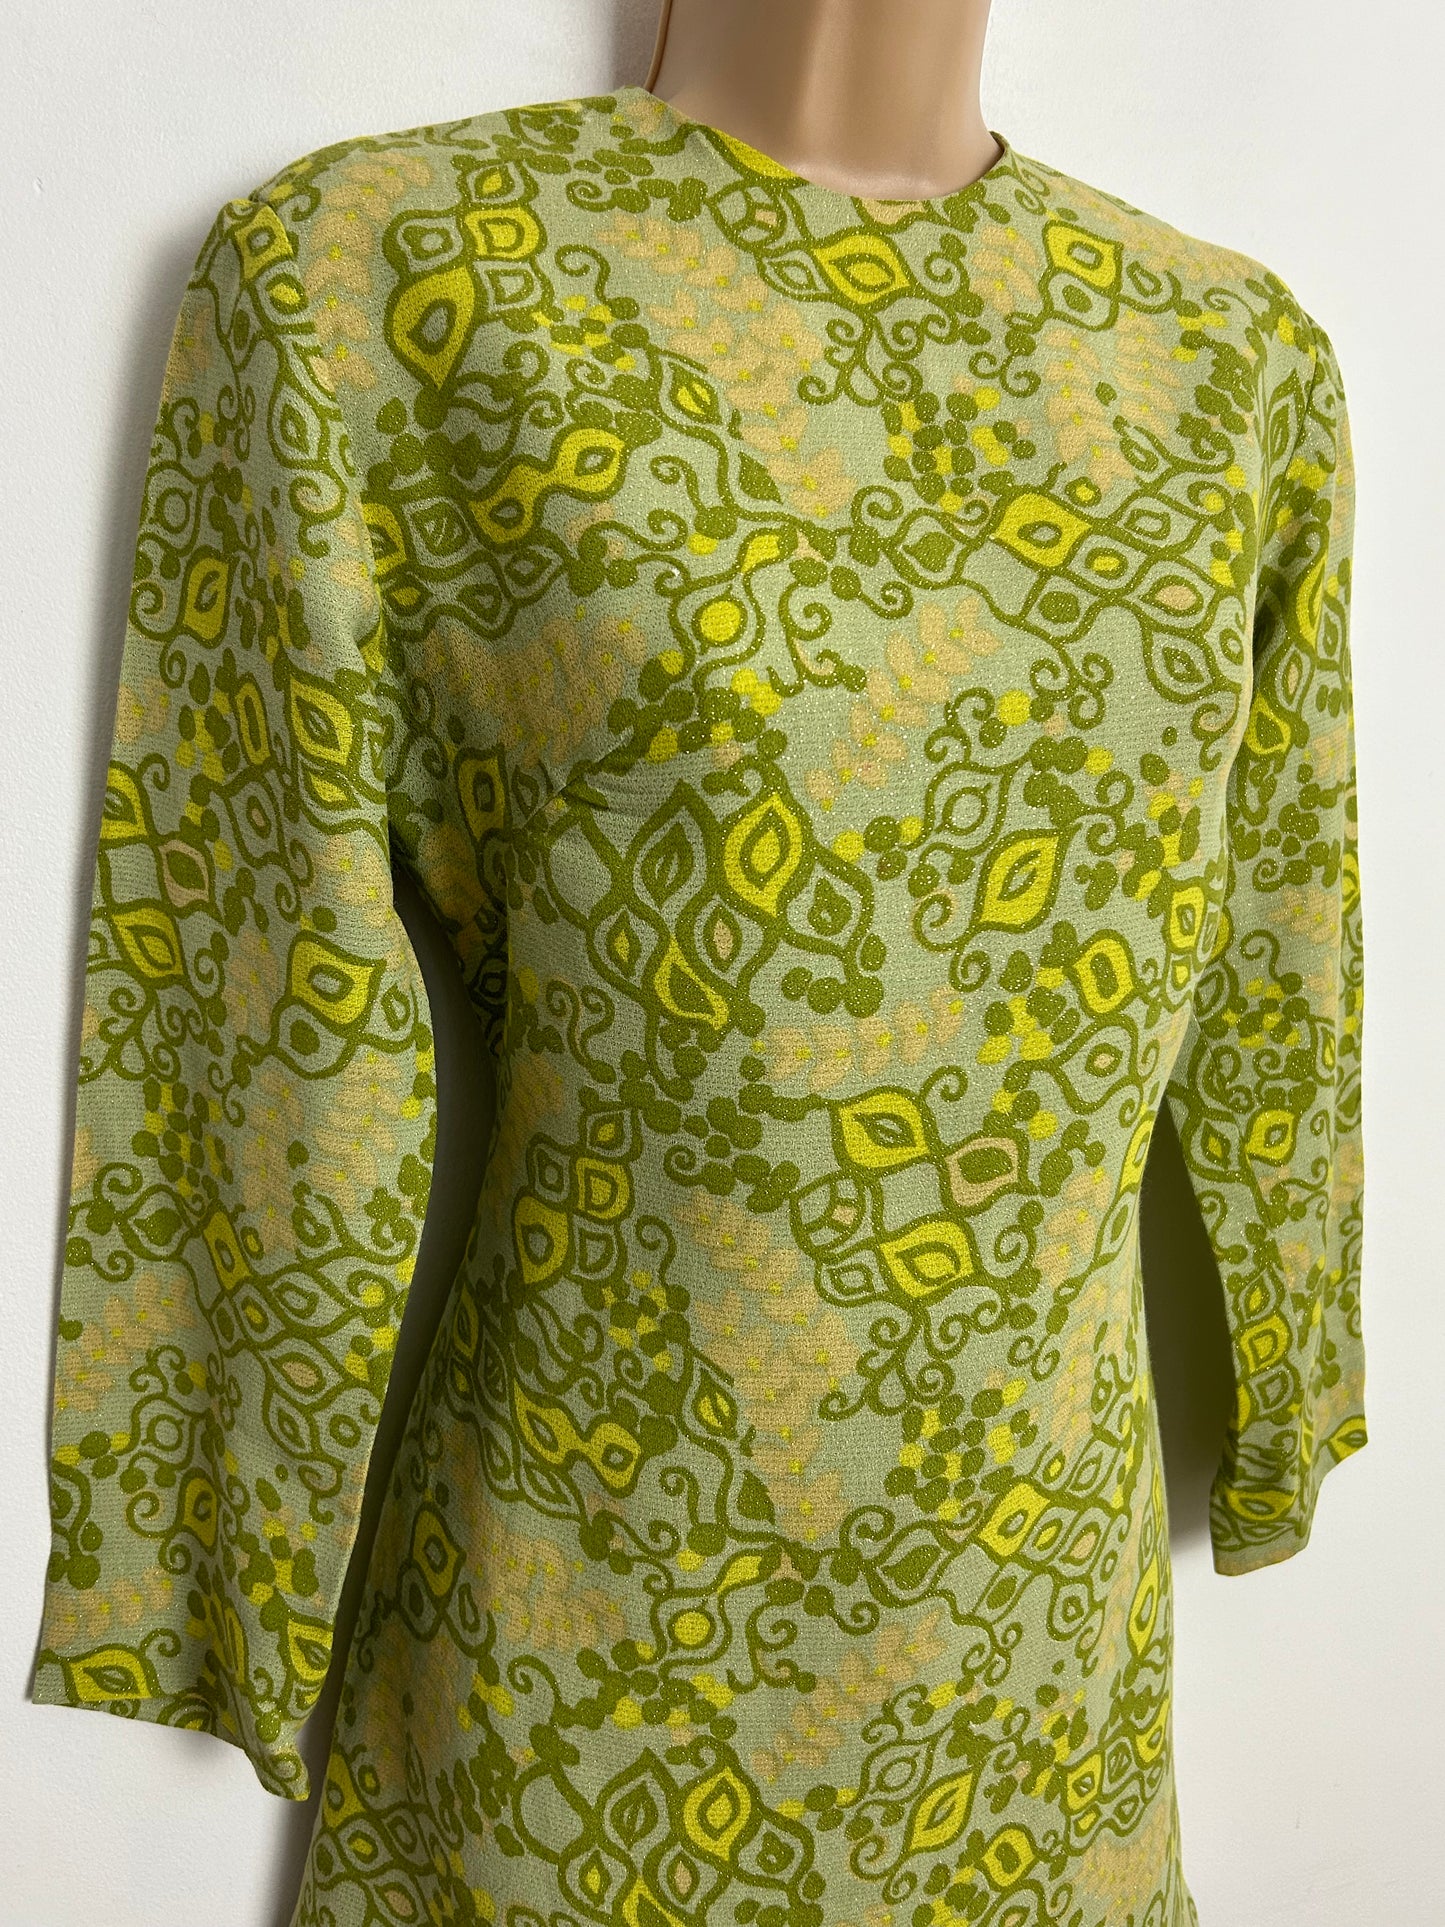 Vintage 1960s UK Size 10 Green Tones Abstract Print Lurex Long Sleeve Mod Shift Dress